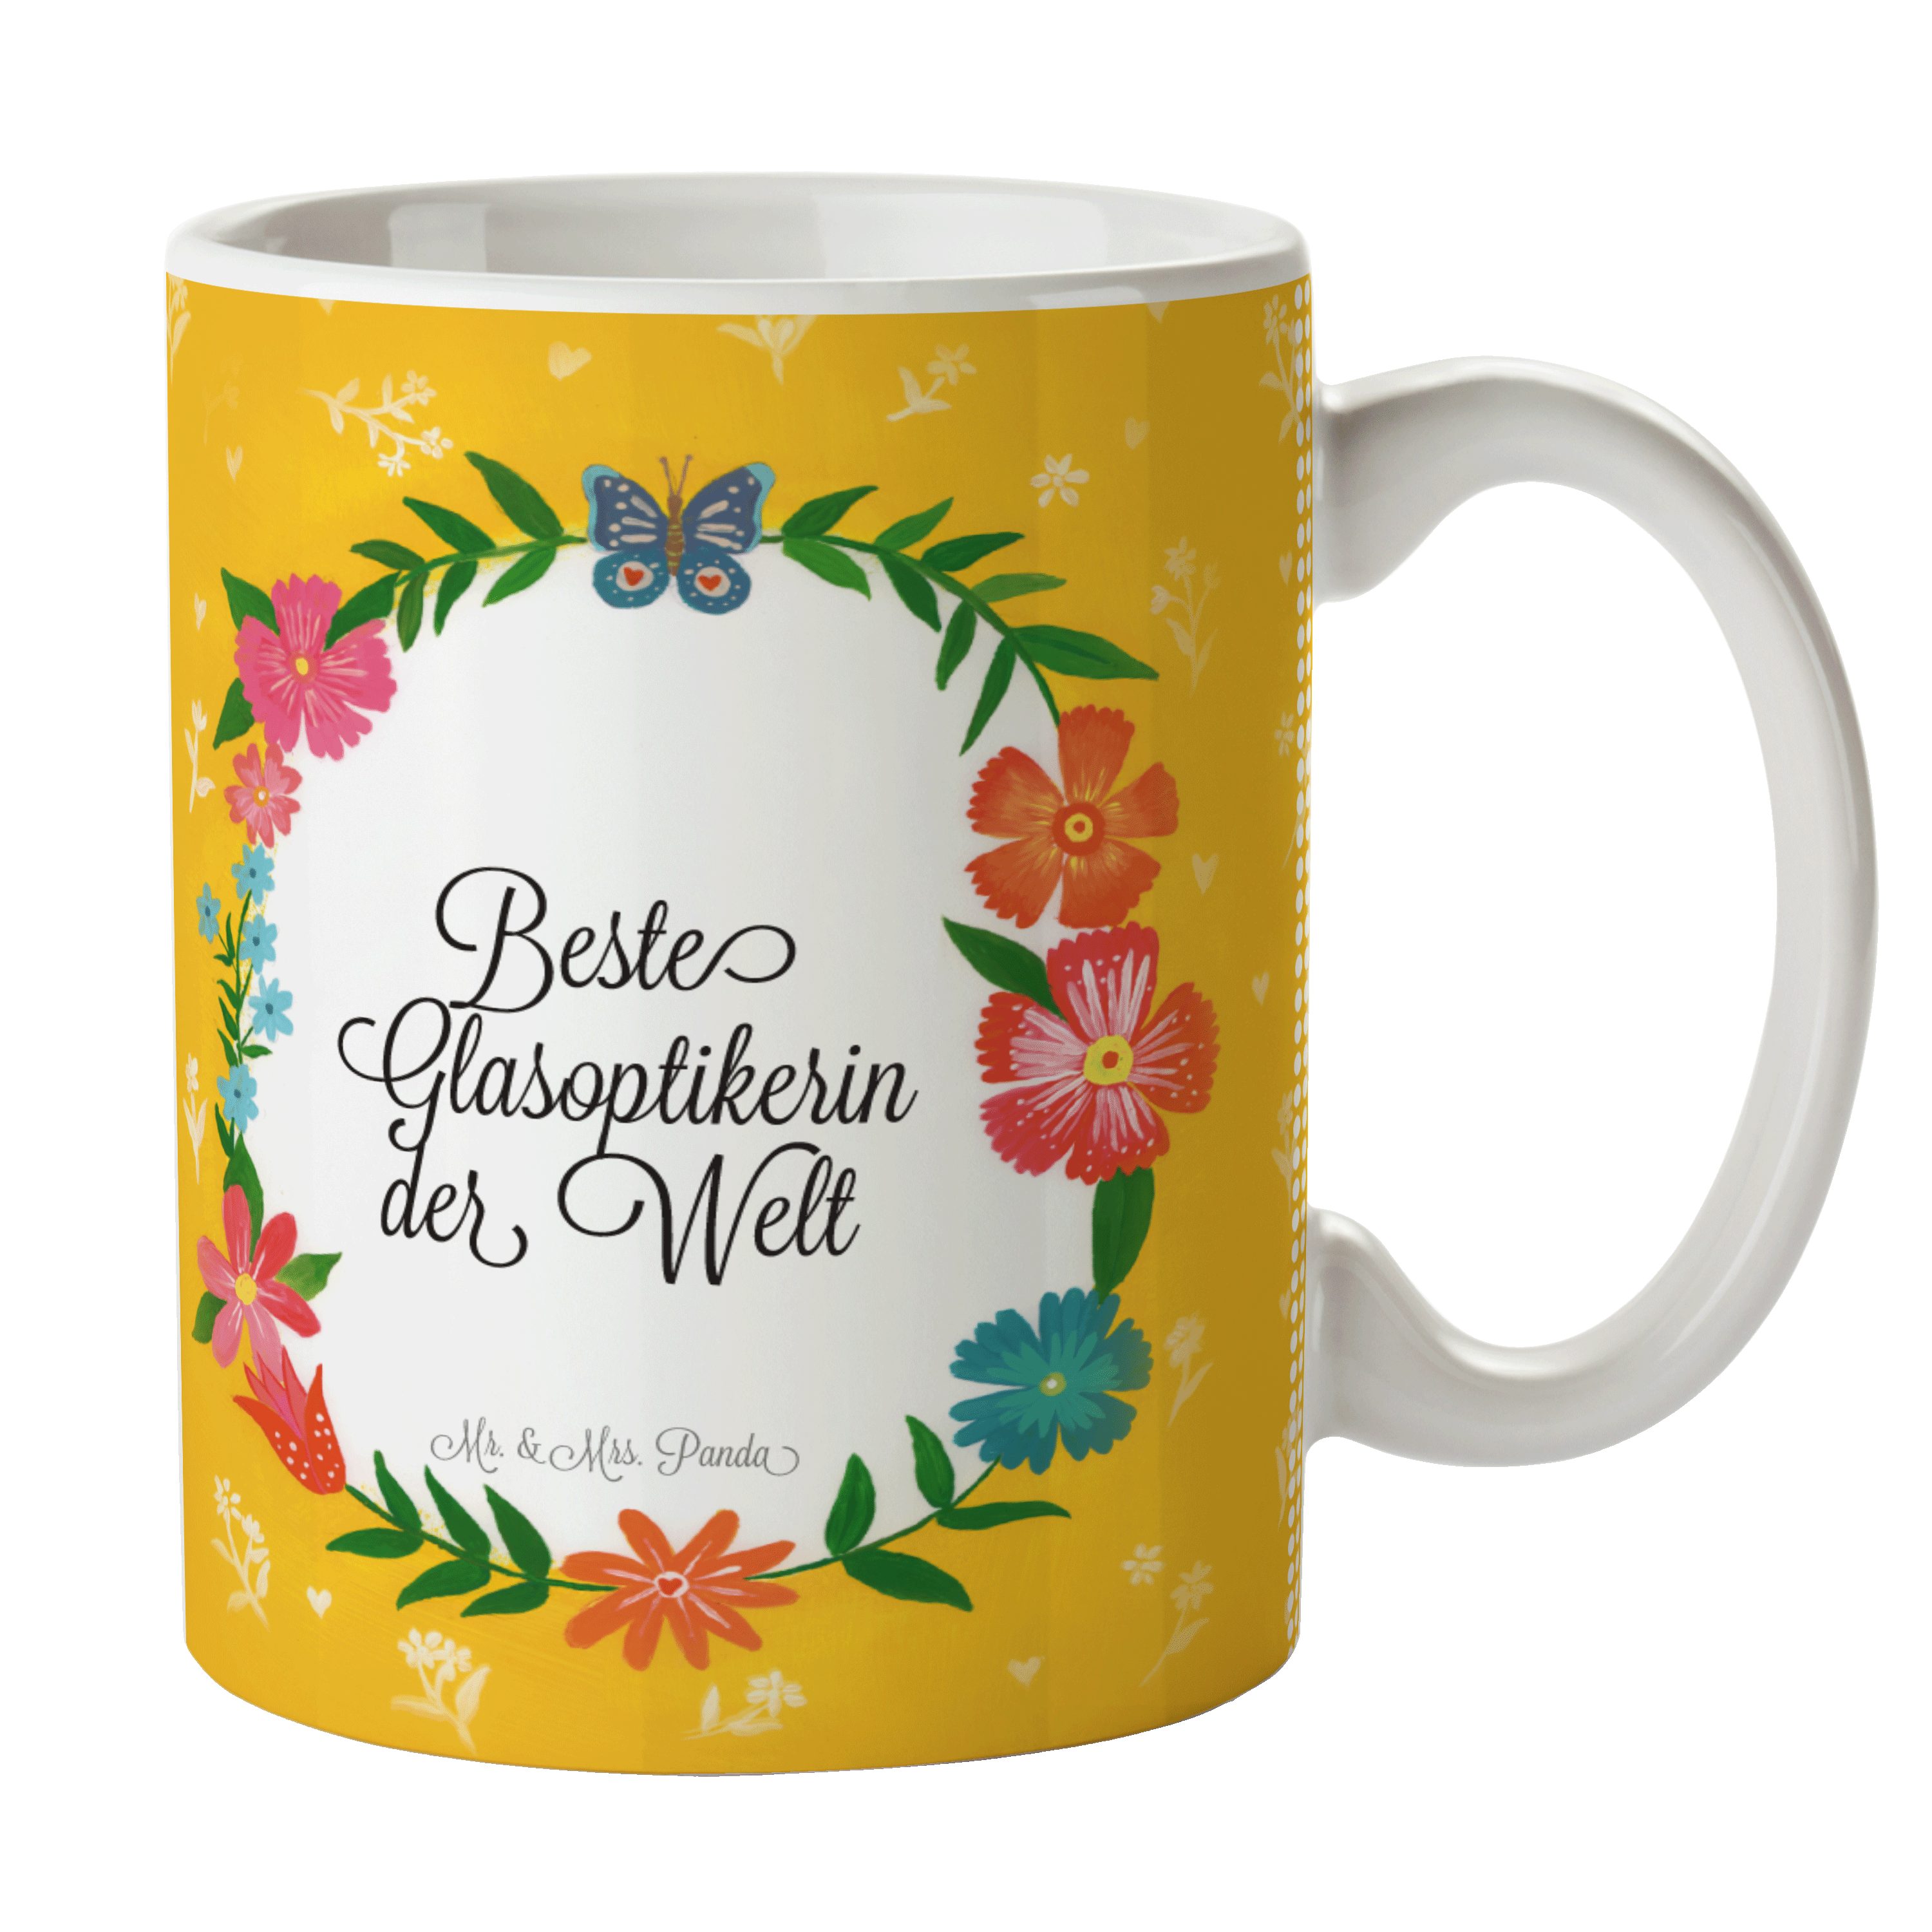 Mr. & Mrs. Panda Tasse Glasoptikerin - Geschenk, Abschied, Kaffeebecher, Kaffeetasse, Teebec, Keramik